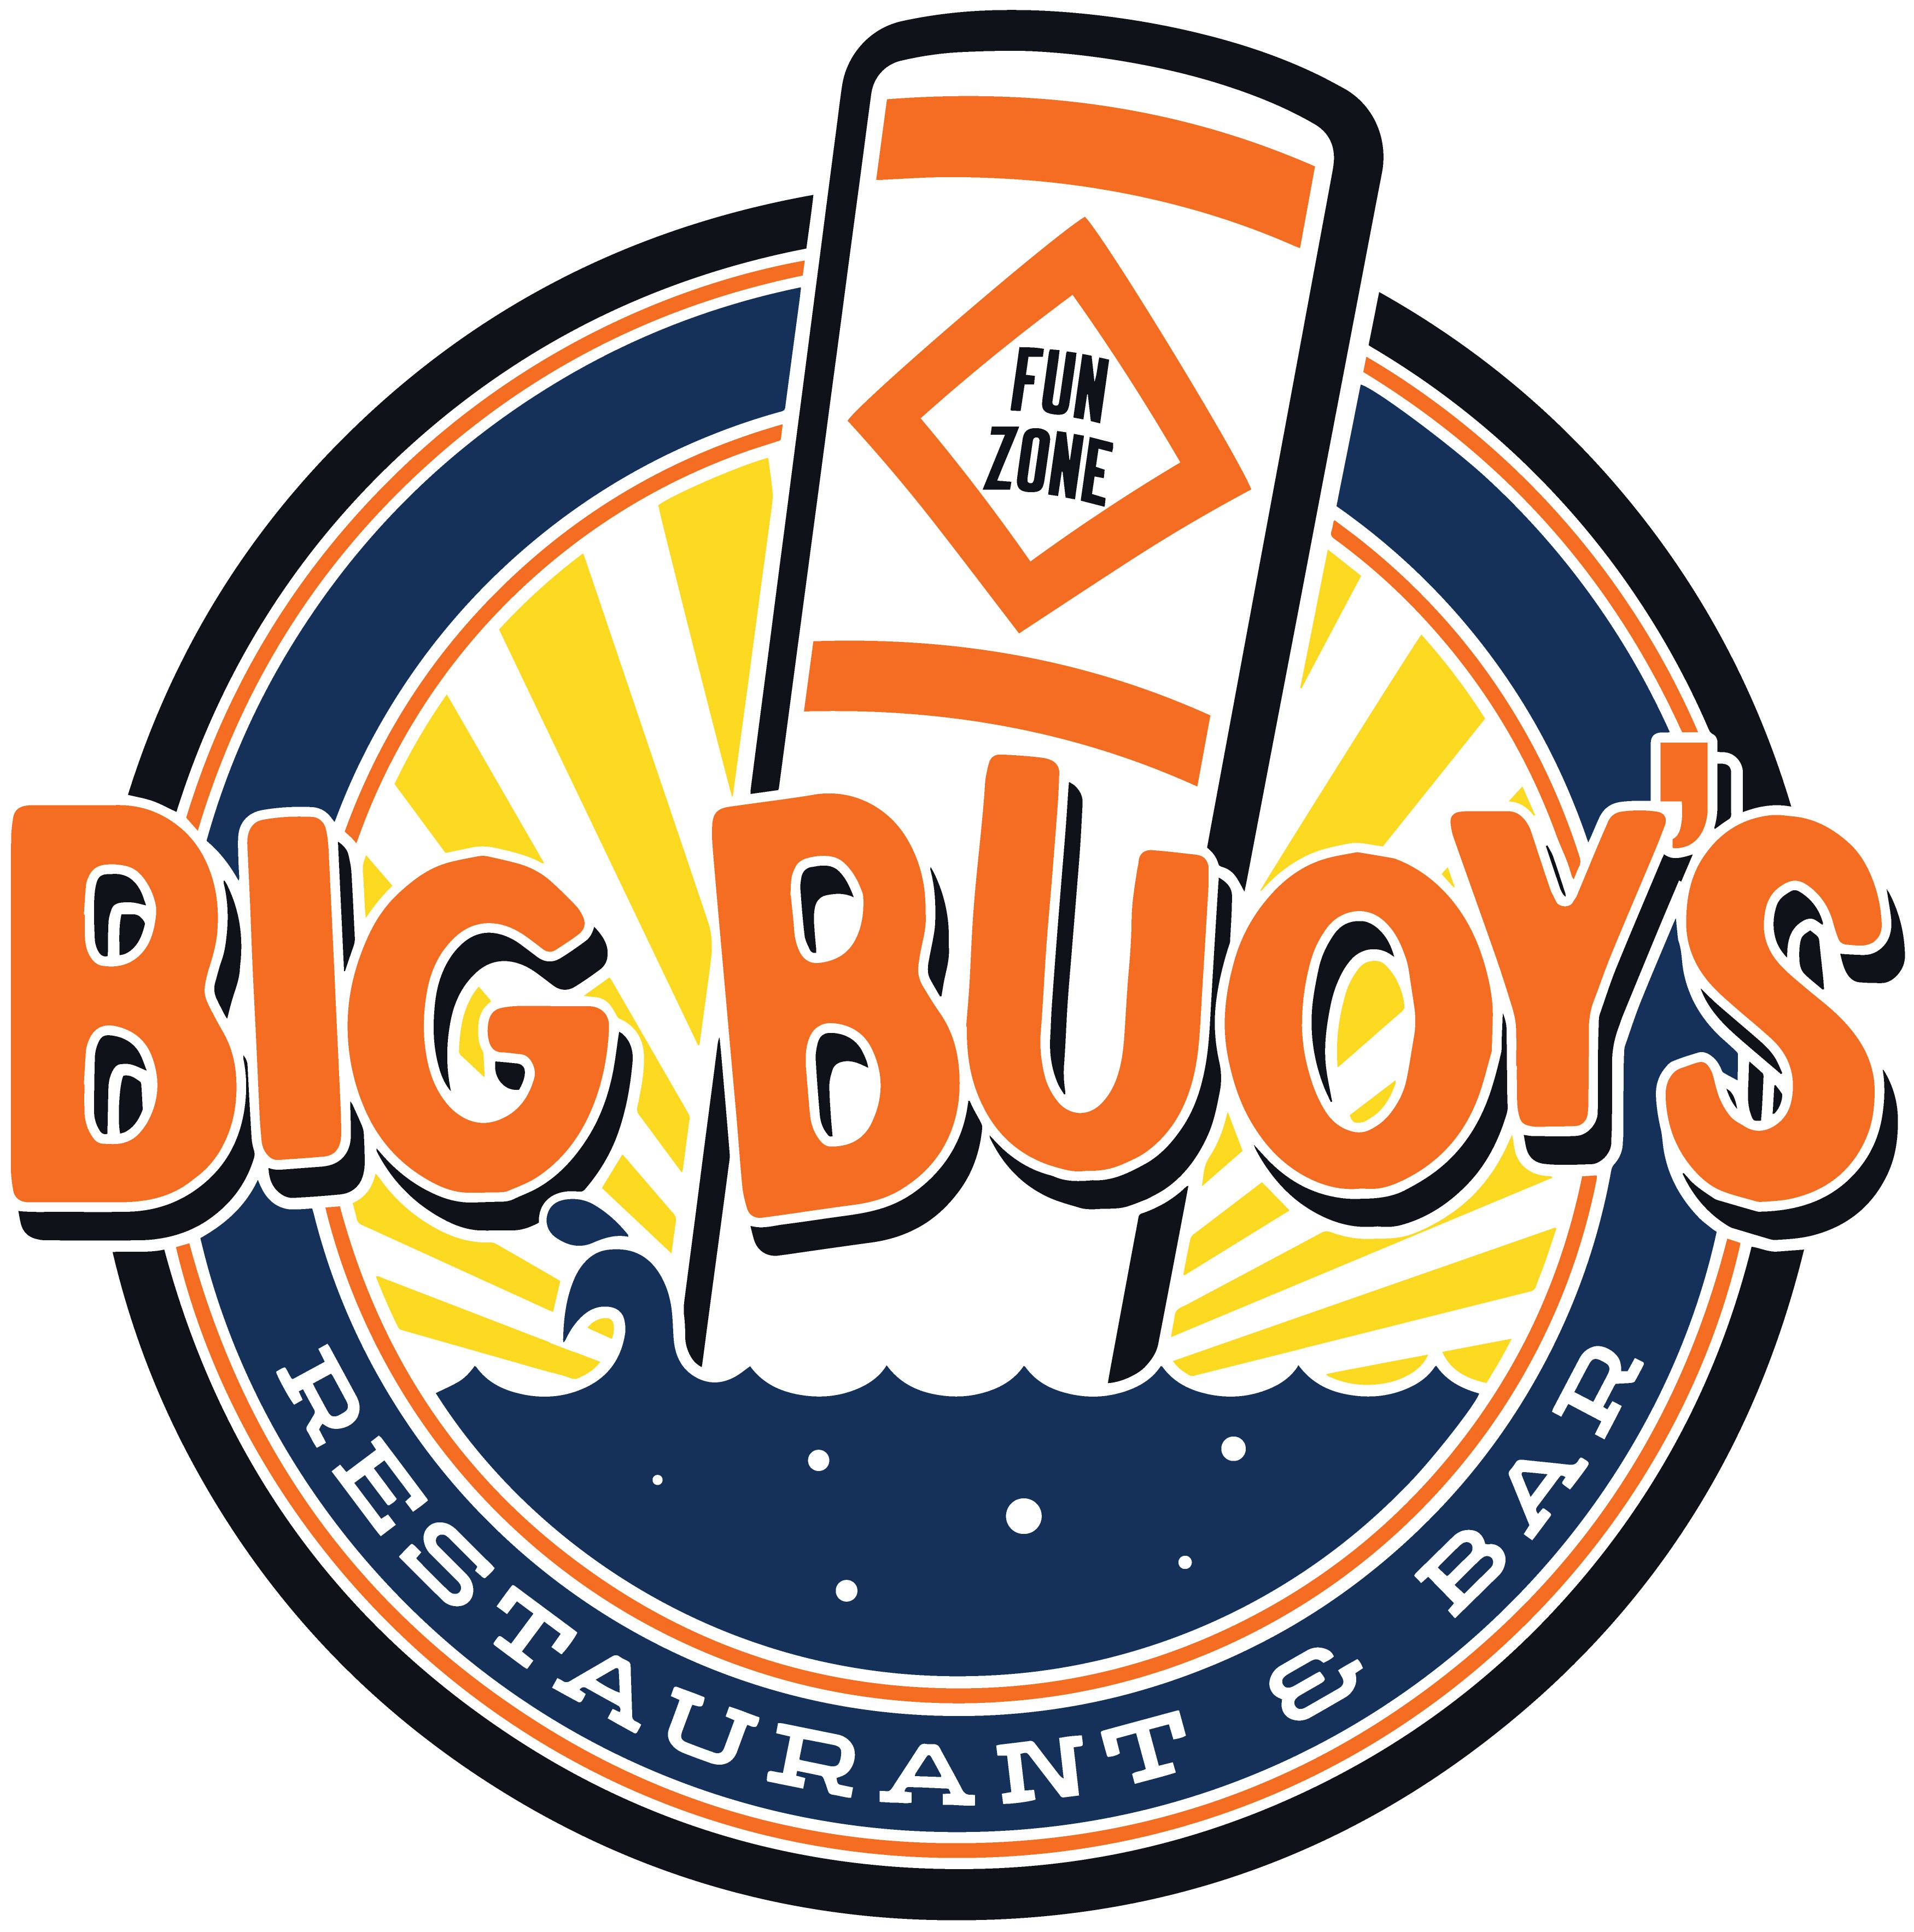 Big Buoys 12051 State Highway 13